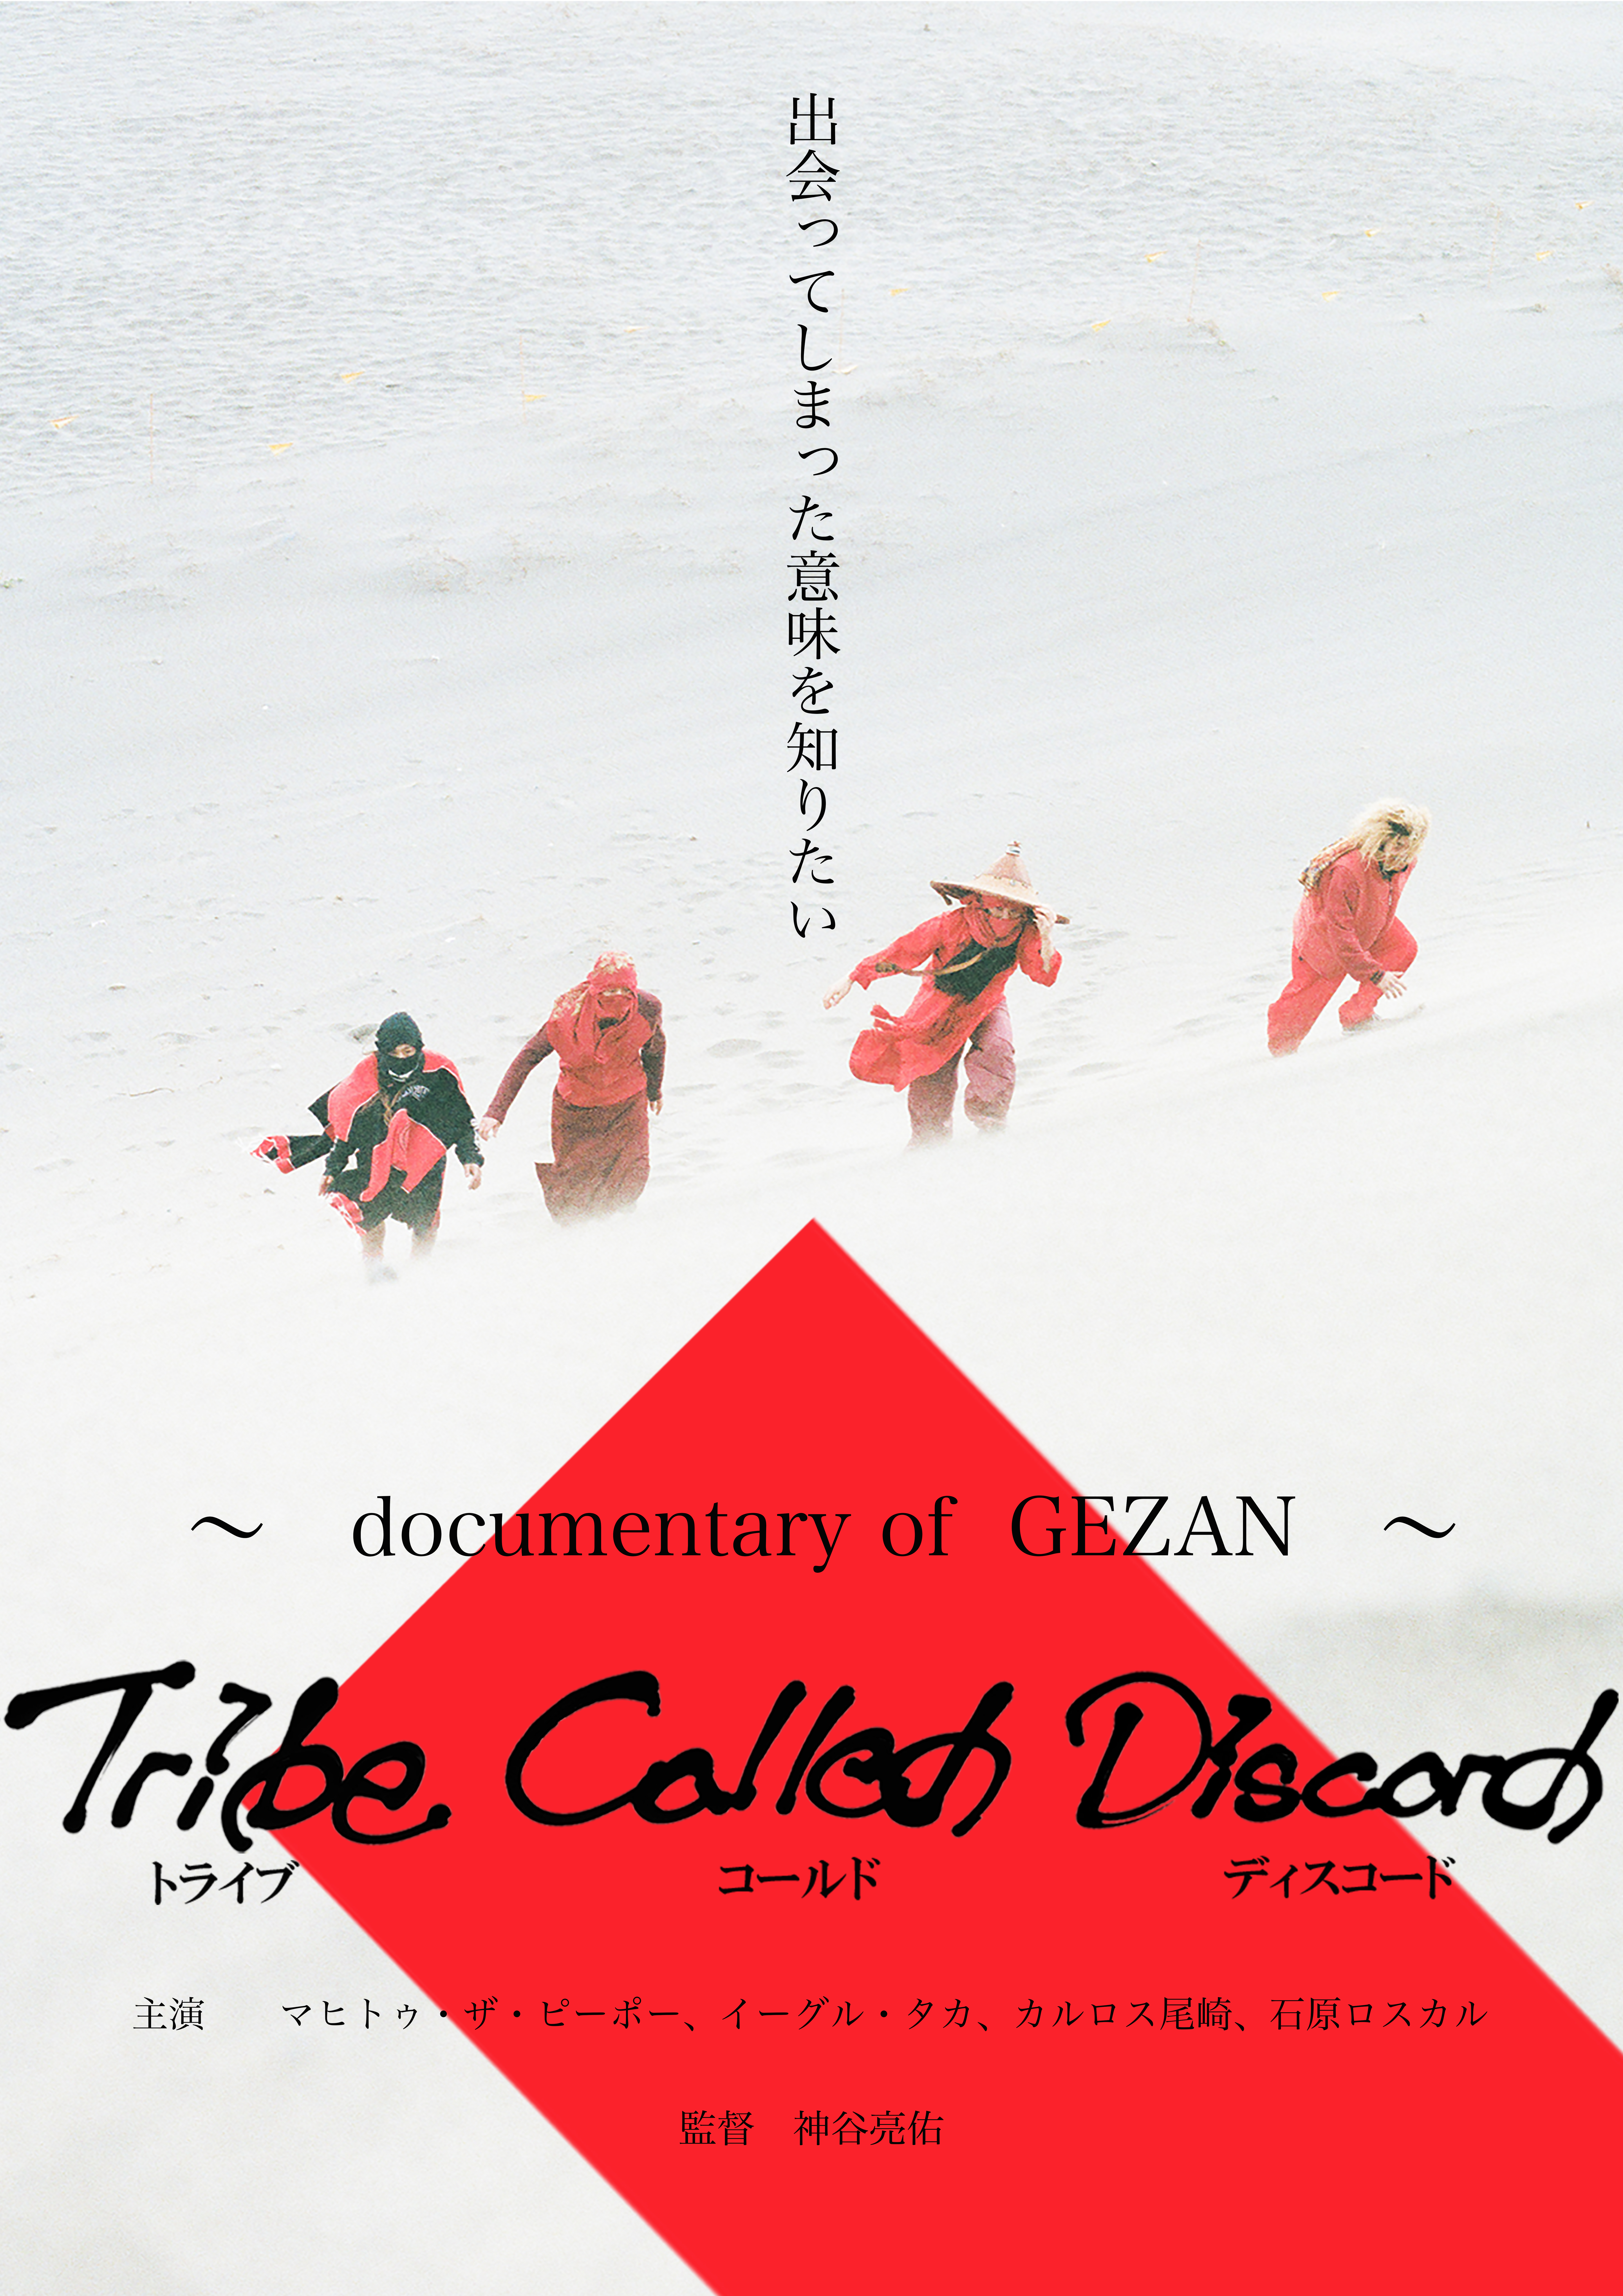 映画「Tribe Called Discord~documentary of GEZAN~」特典映像付きDVD発売開始